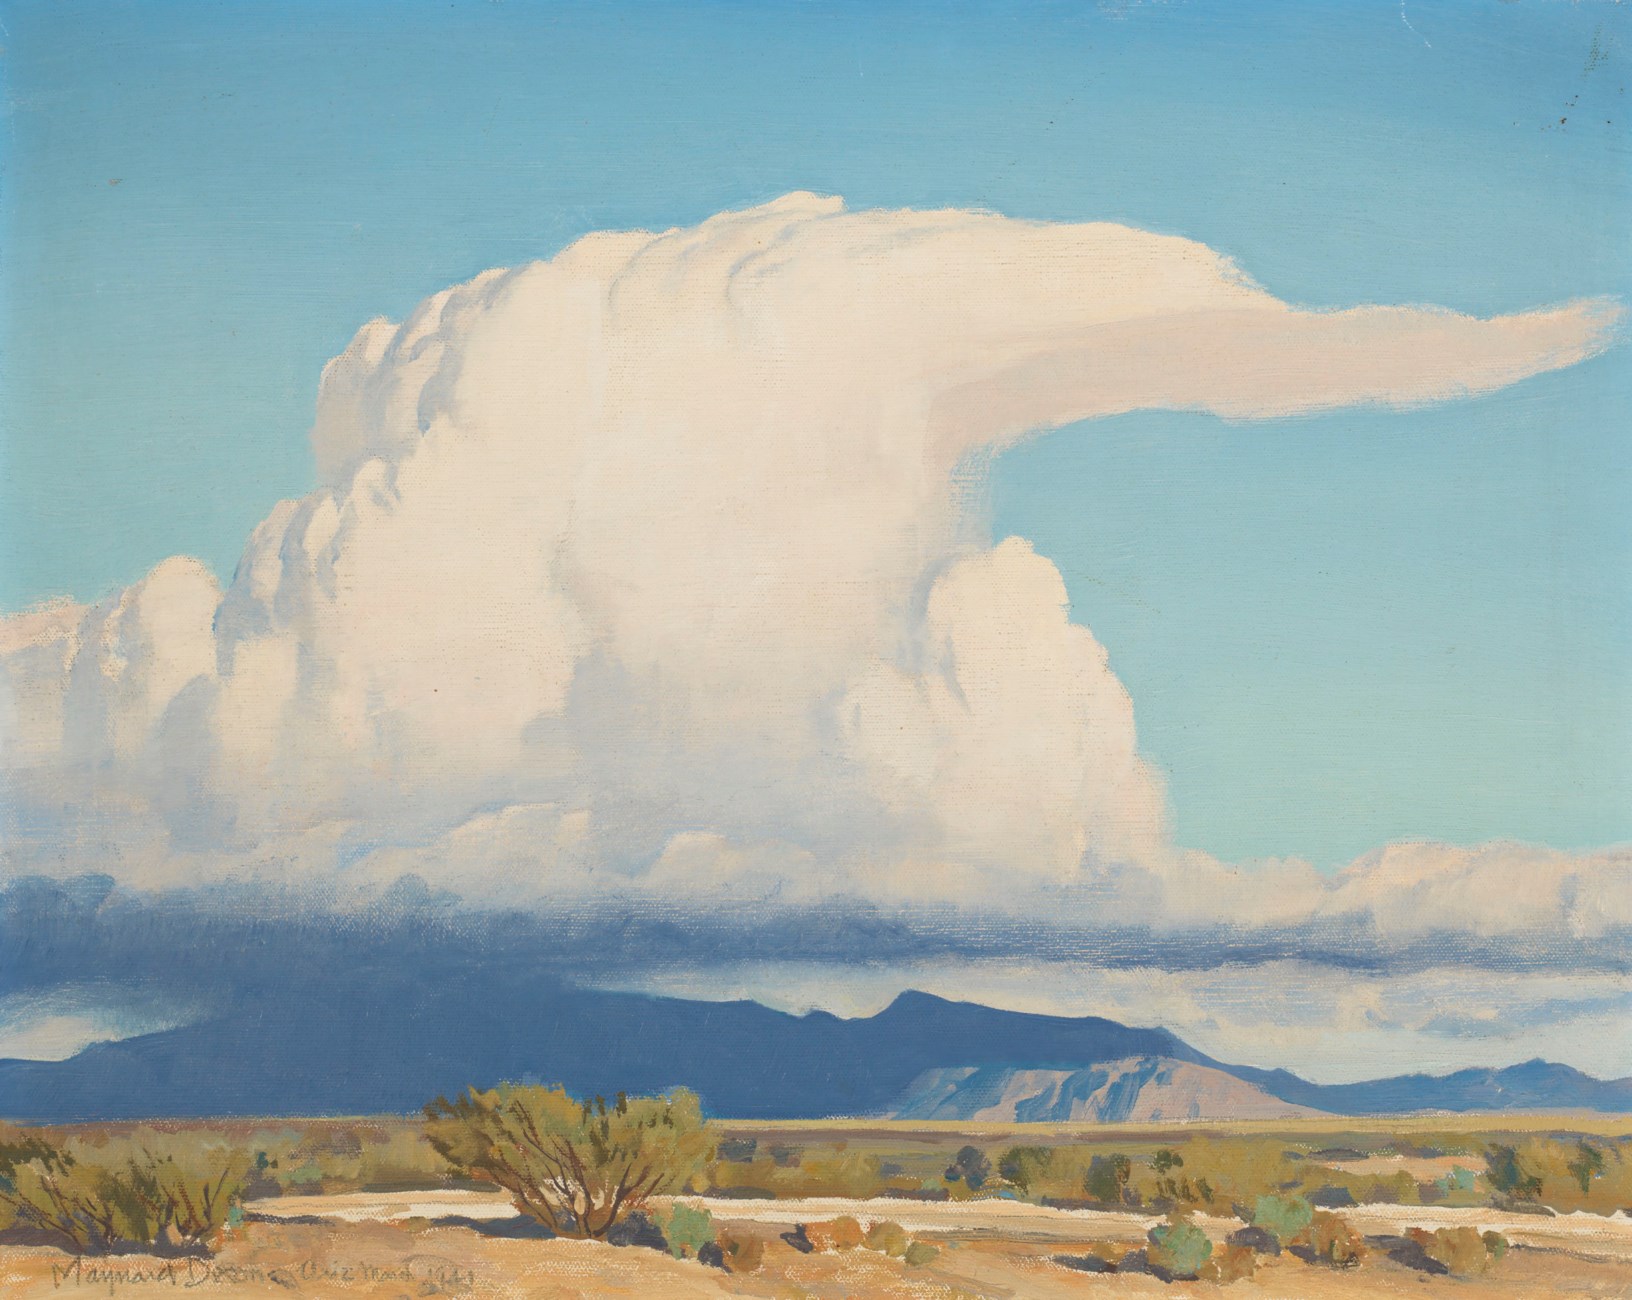 Felhő by Maynard Dixon - 1941 - 40,6 x 50,8 cm 